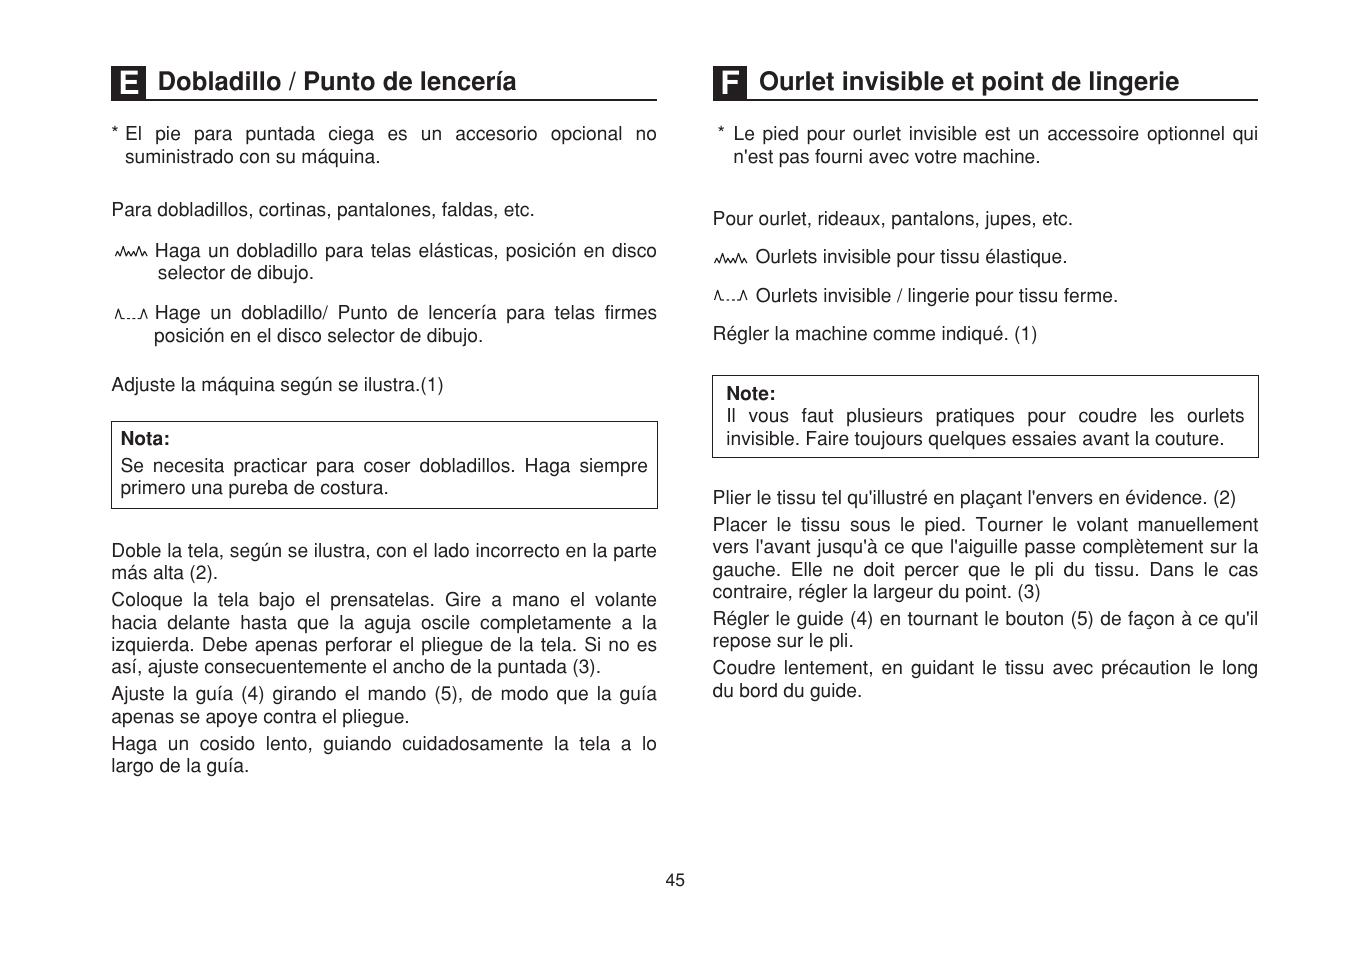 Dobladillo / punto de lencería, Ourlet et point de lingerie invisible | SINGER 1525 User Manual | Page 52 / 76